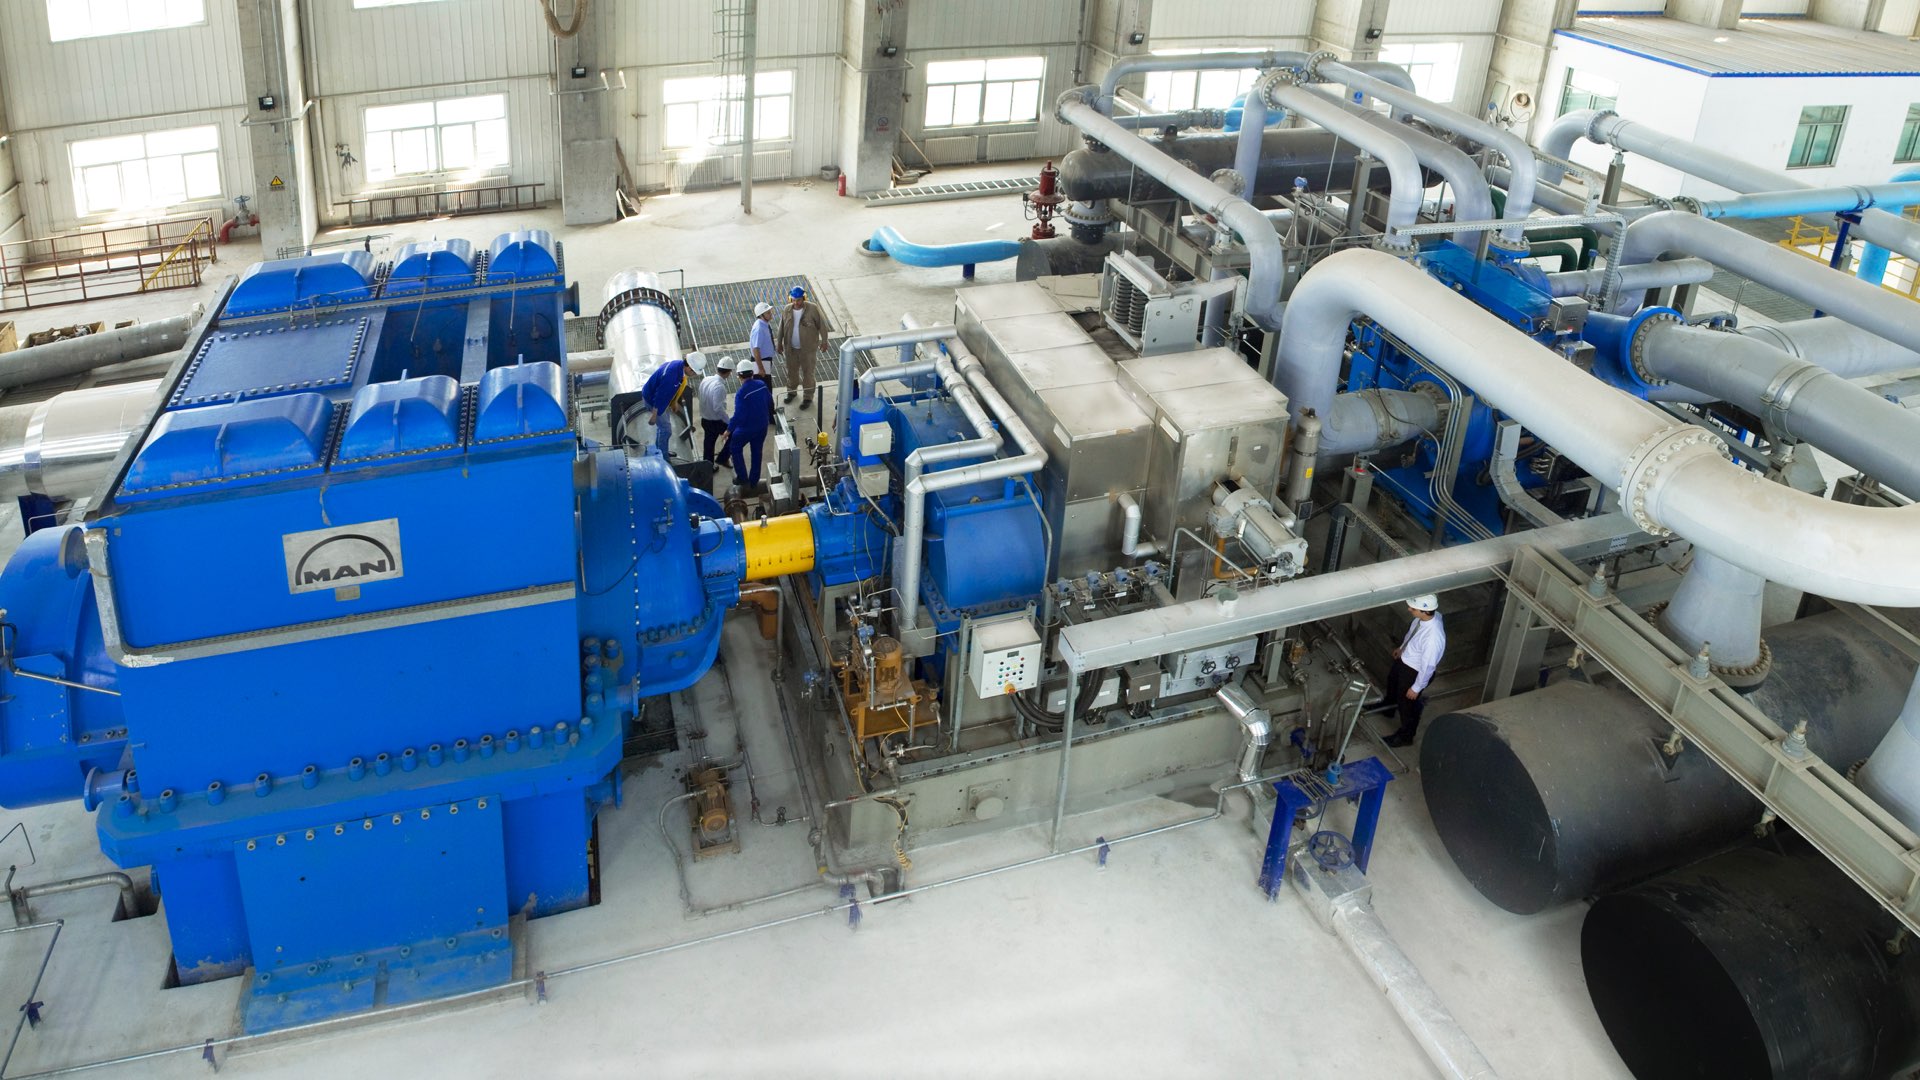 Steam turbine installed in Bautou, China